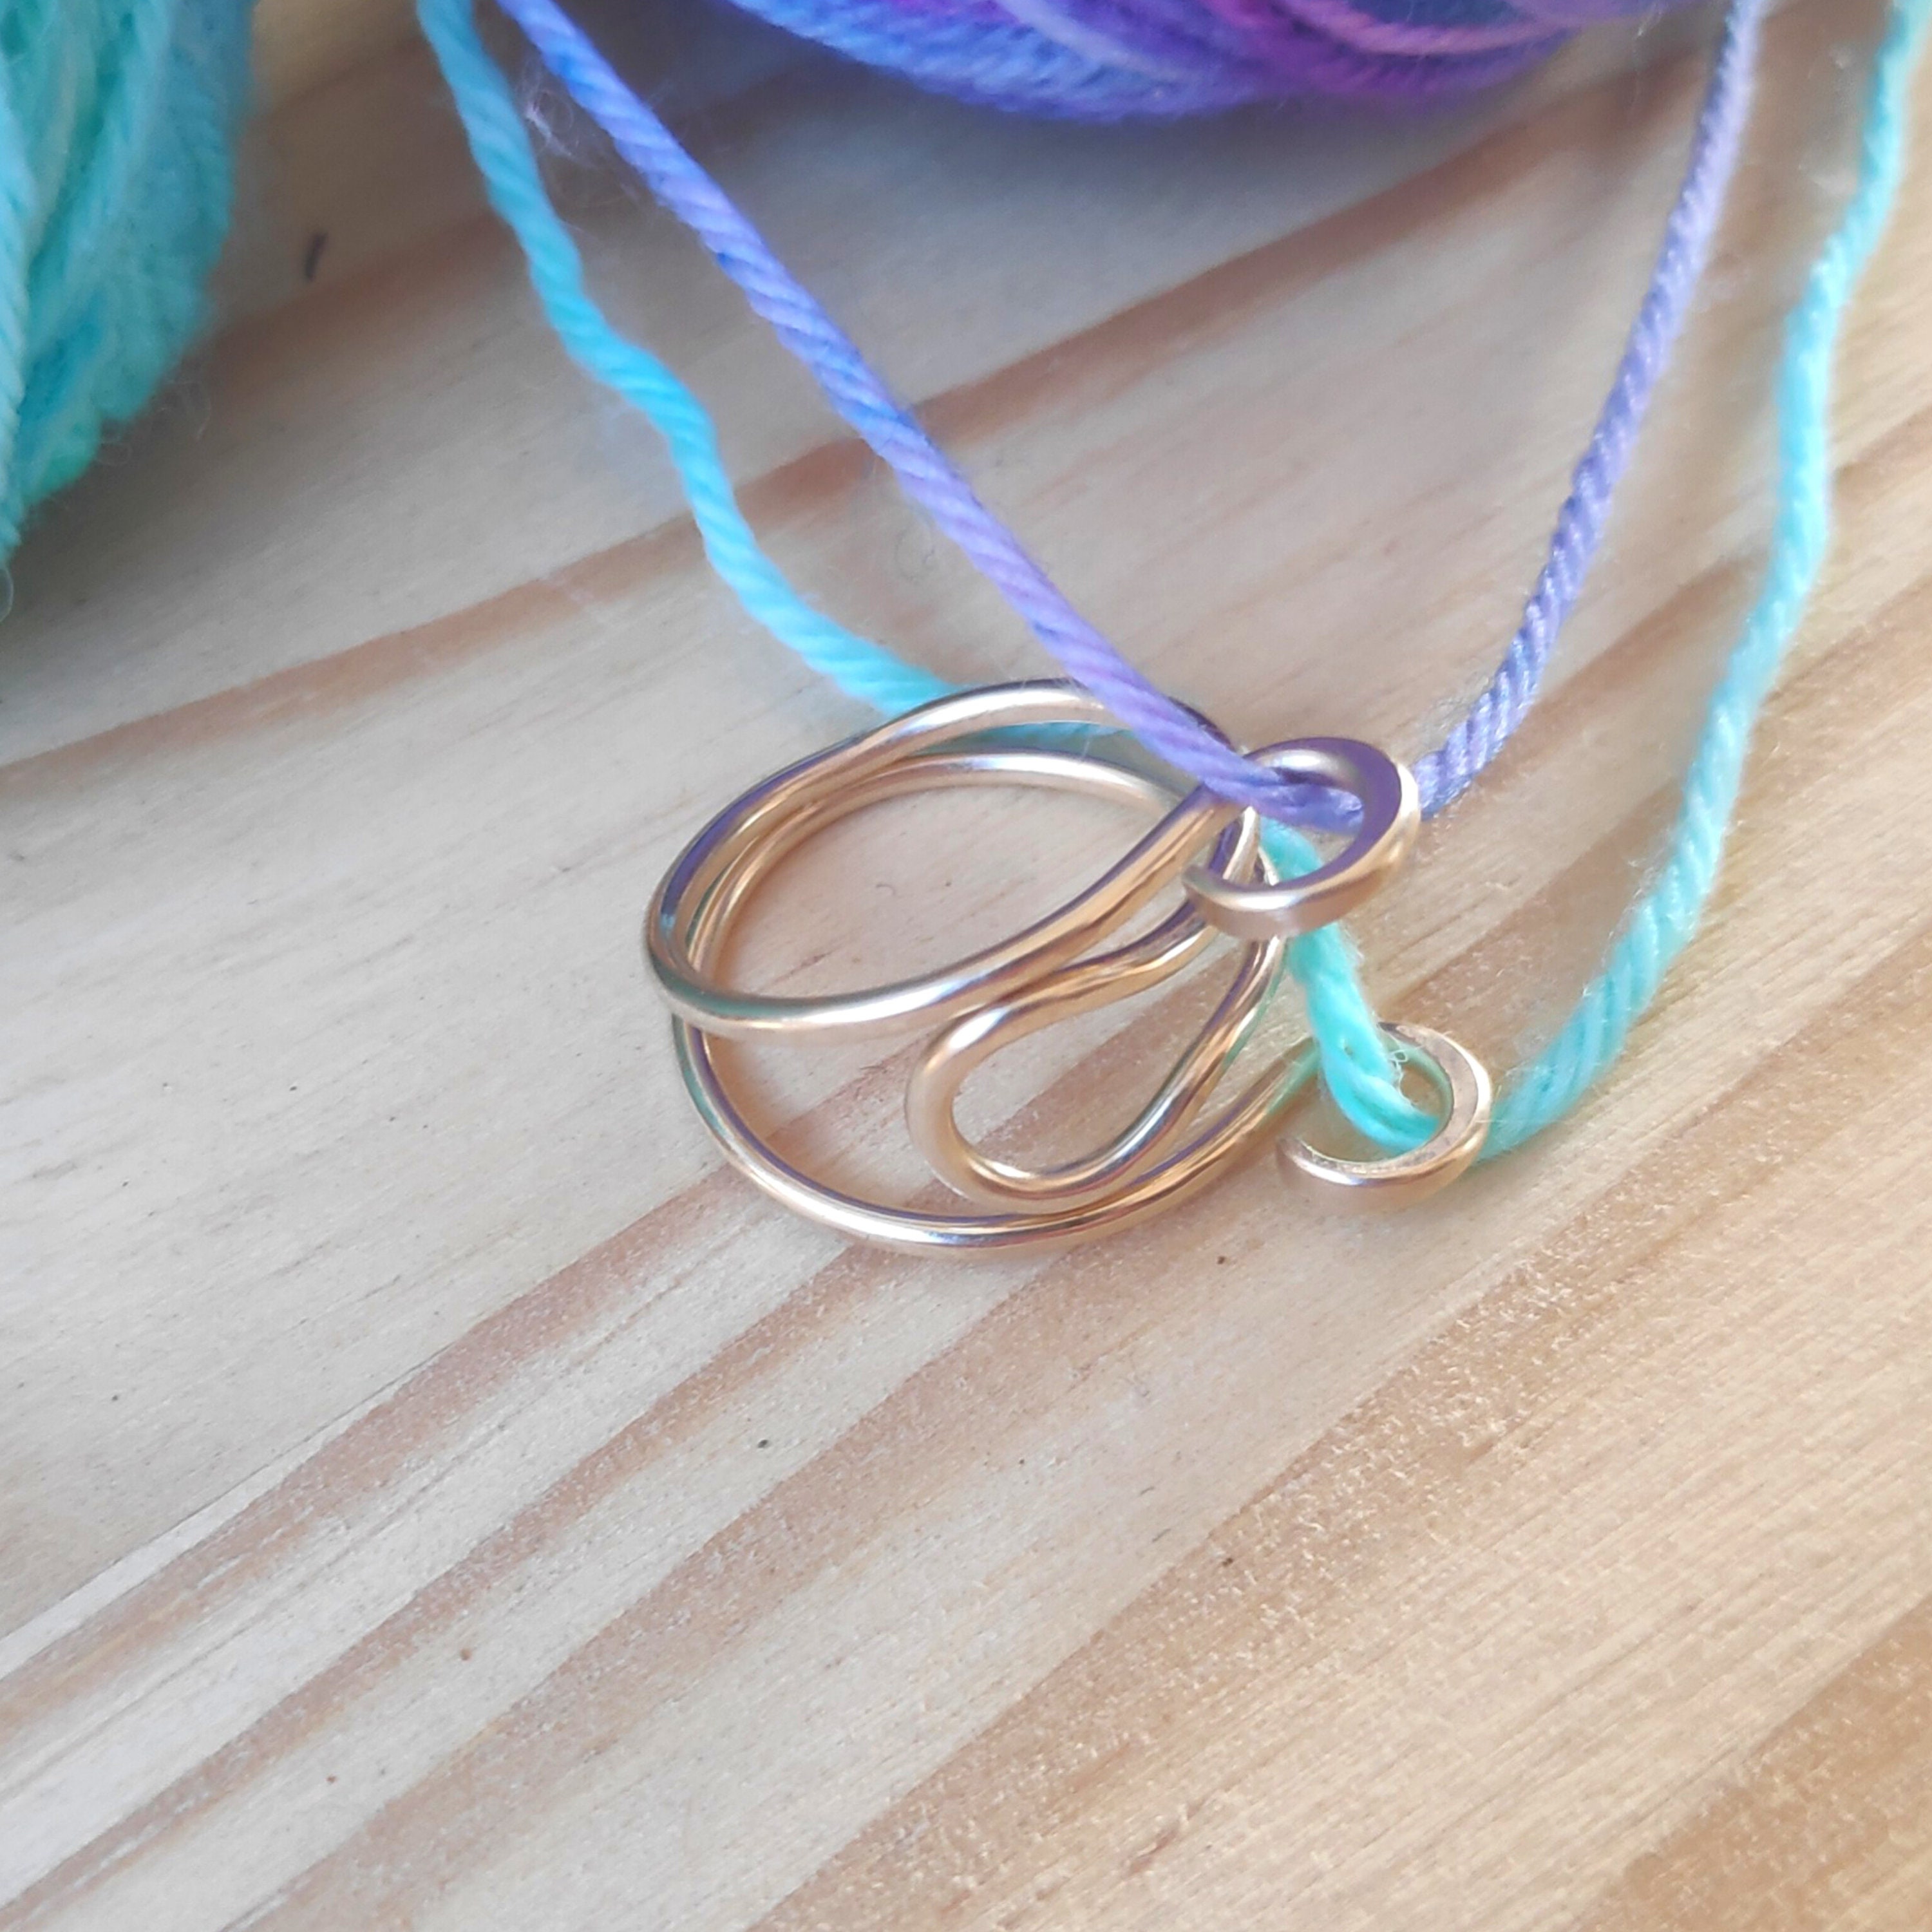 Cosmos Yarn Guide Ring Crochet / Knitting Tension Ring 935